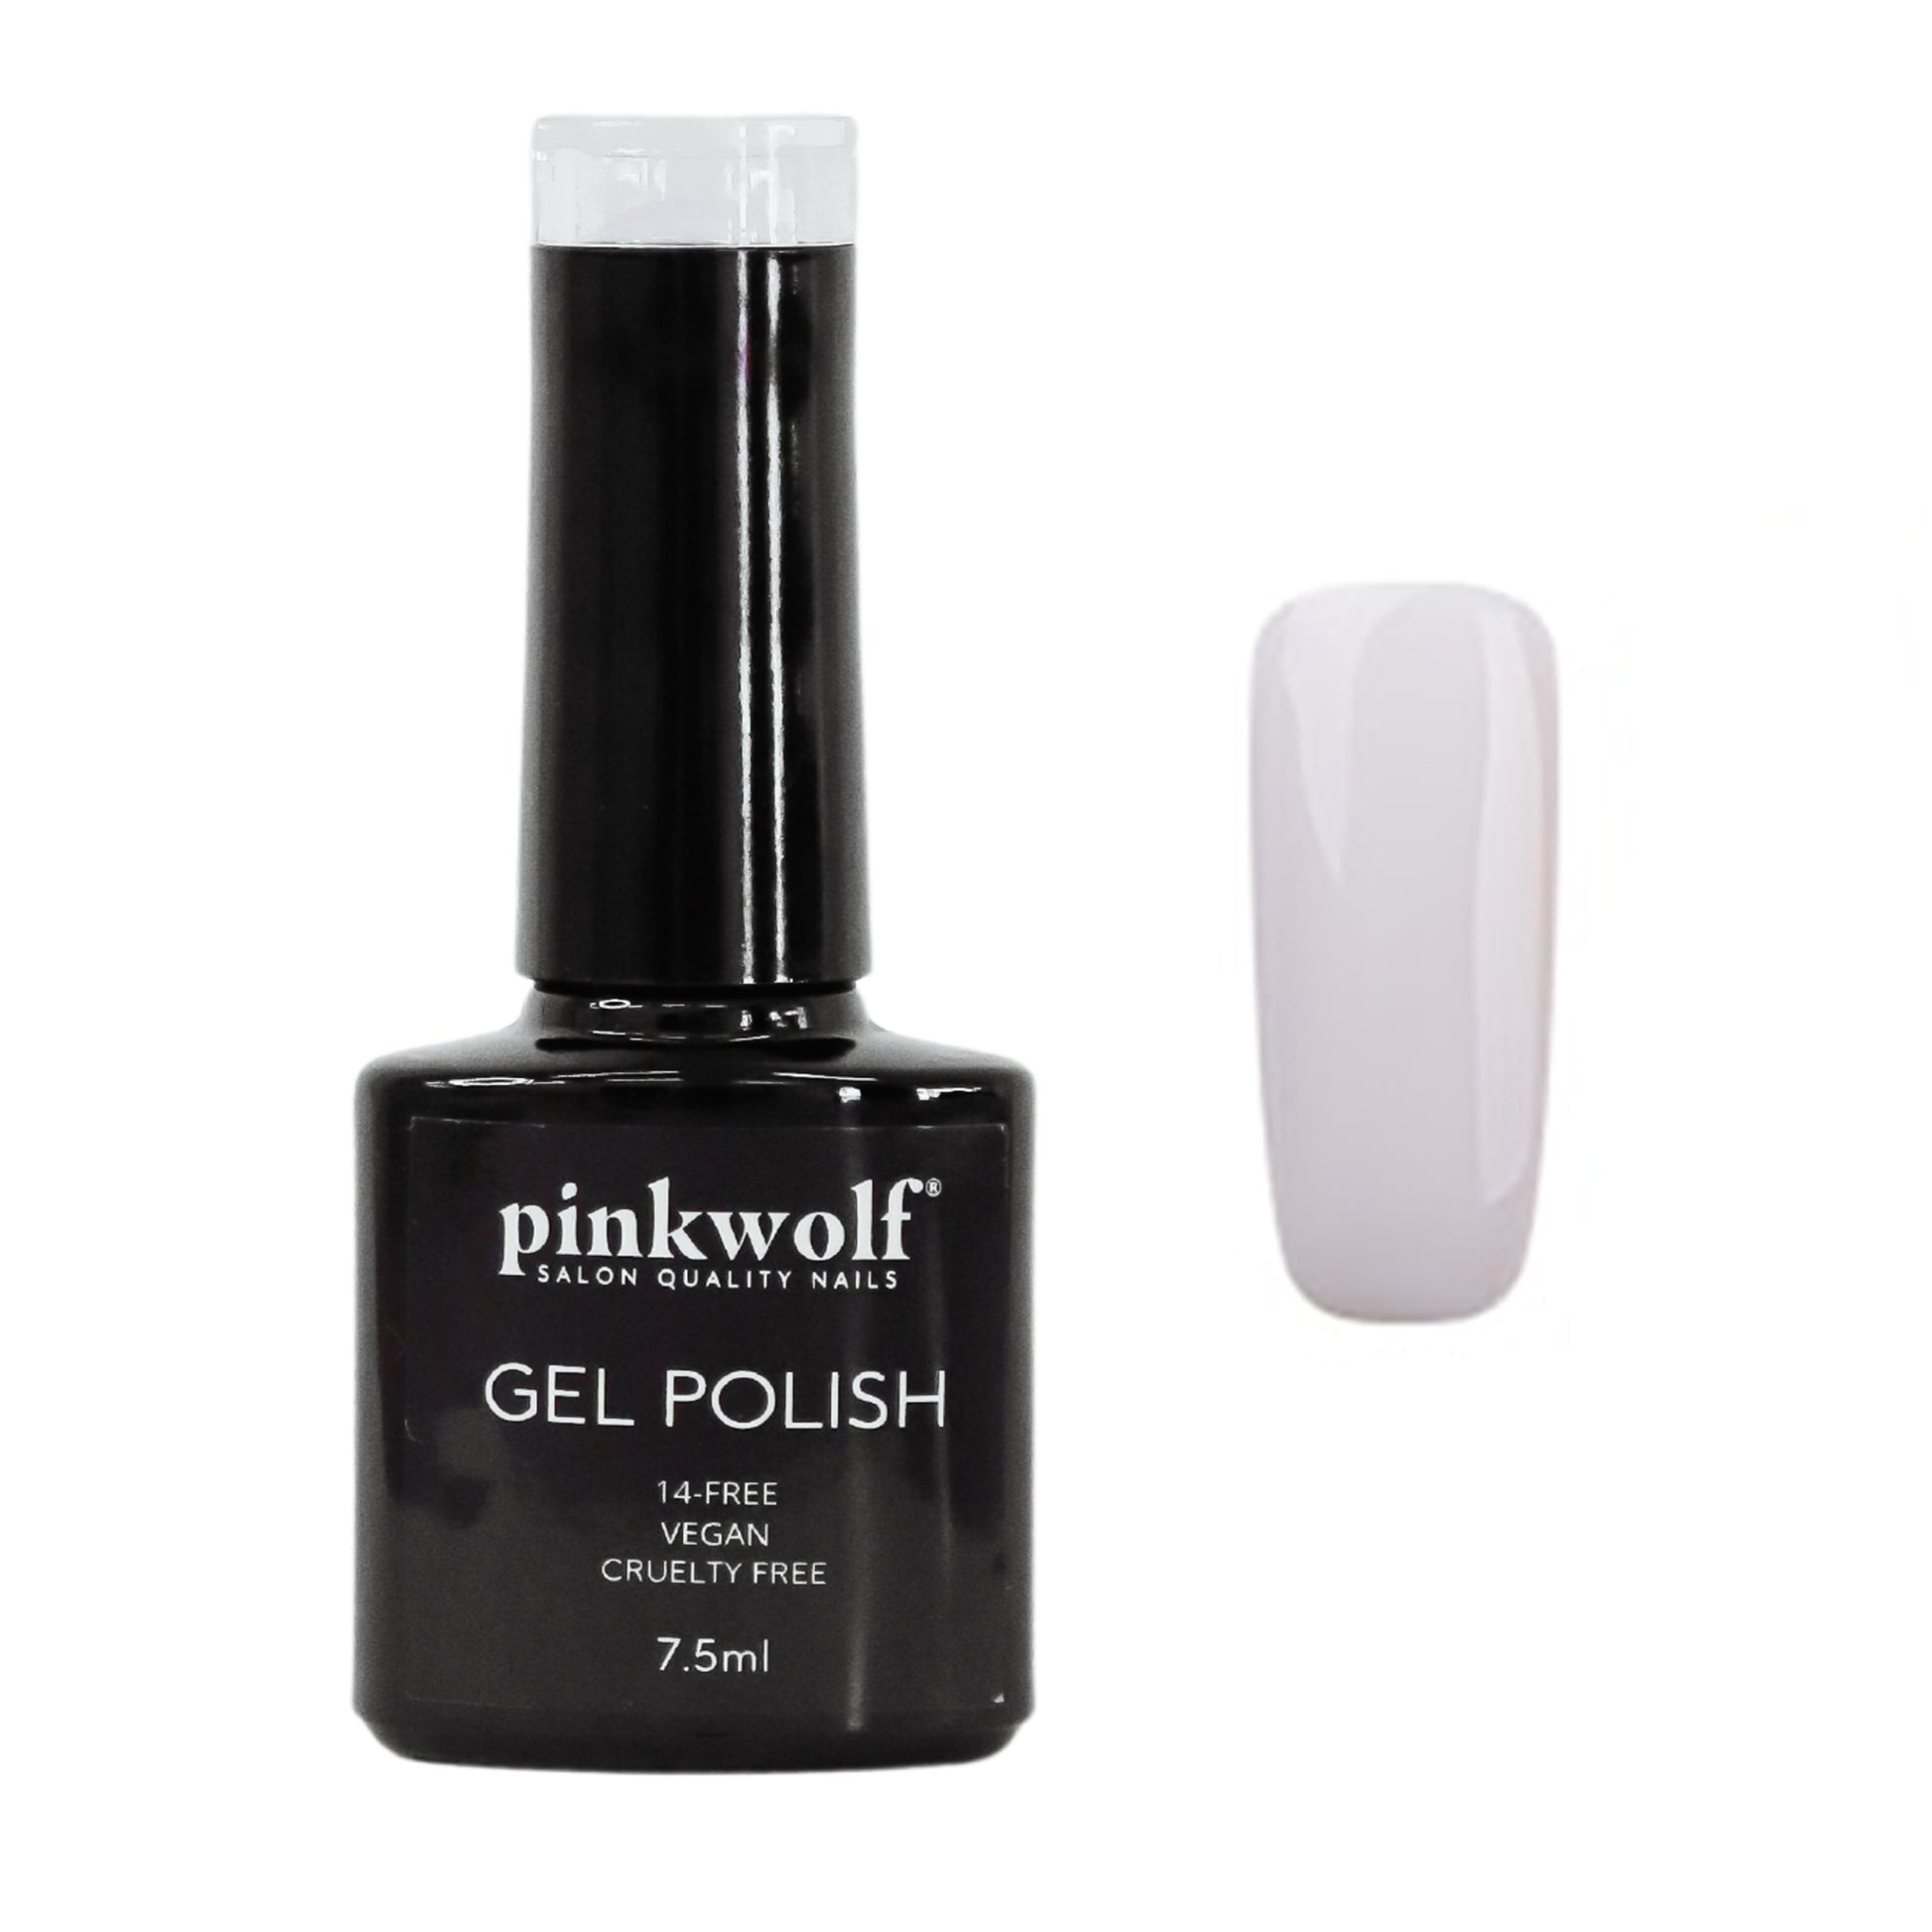 Pinkwolf white gel nail polish 7.5ml bottle 